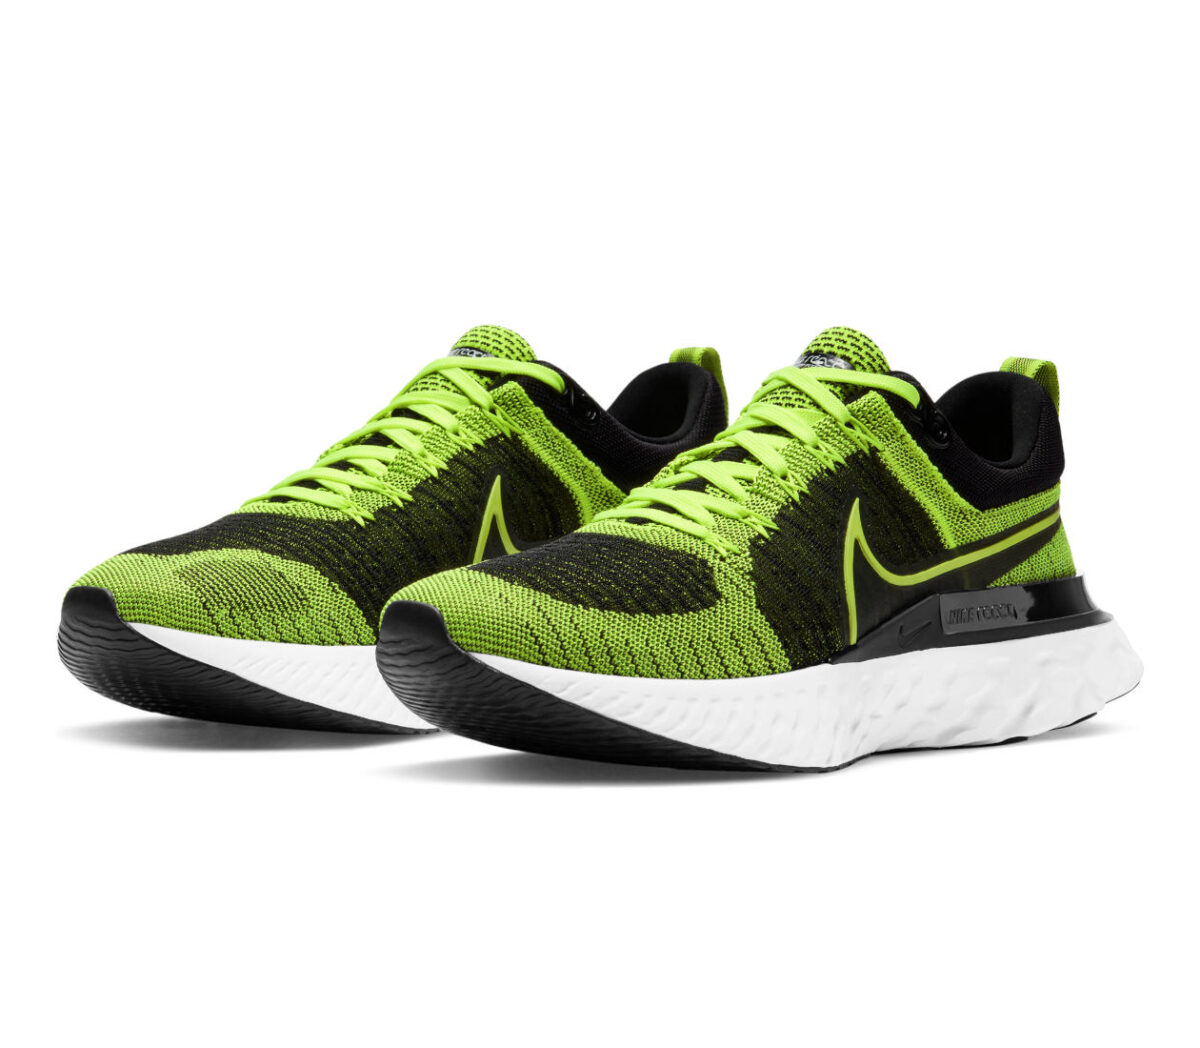 coppia scarpe da running Nike React Infinity Run Flyknit 2 verdi fluo